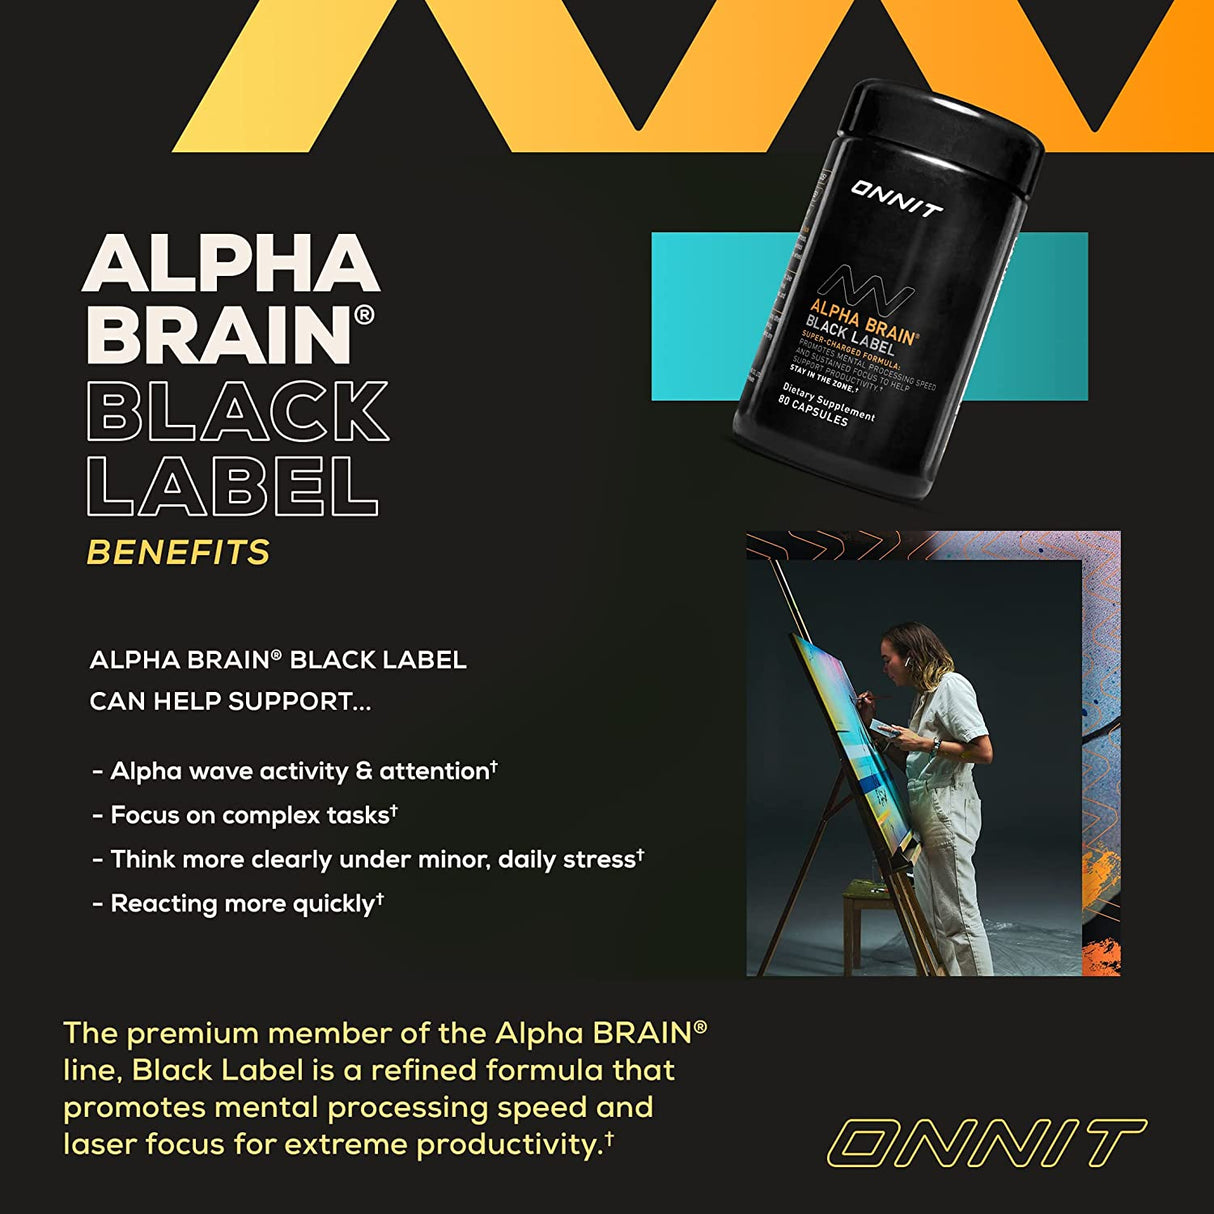 ONNIT Alpha Brain Black Label 80 Capsulas